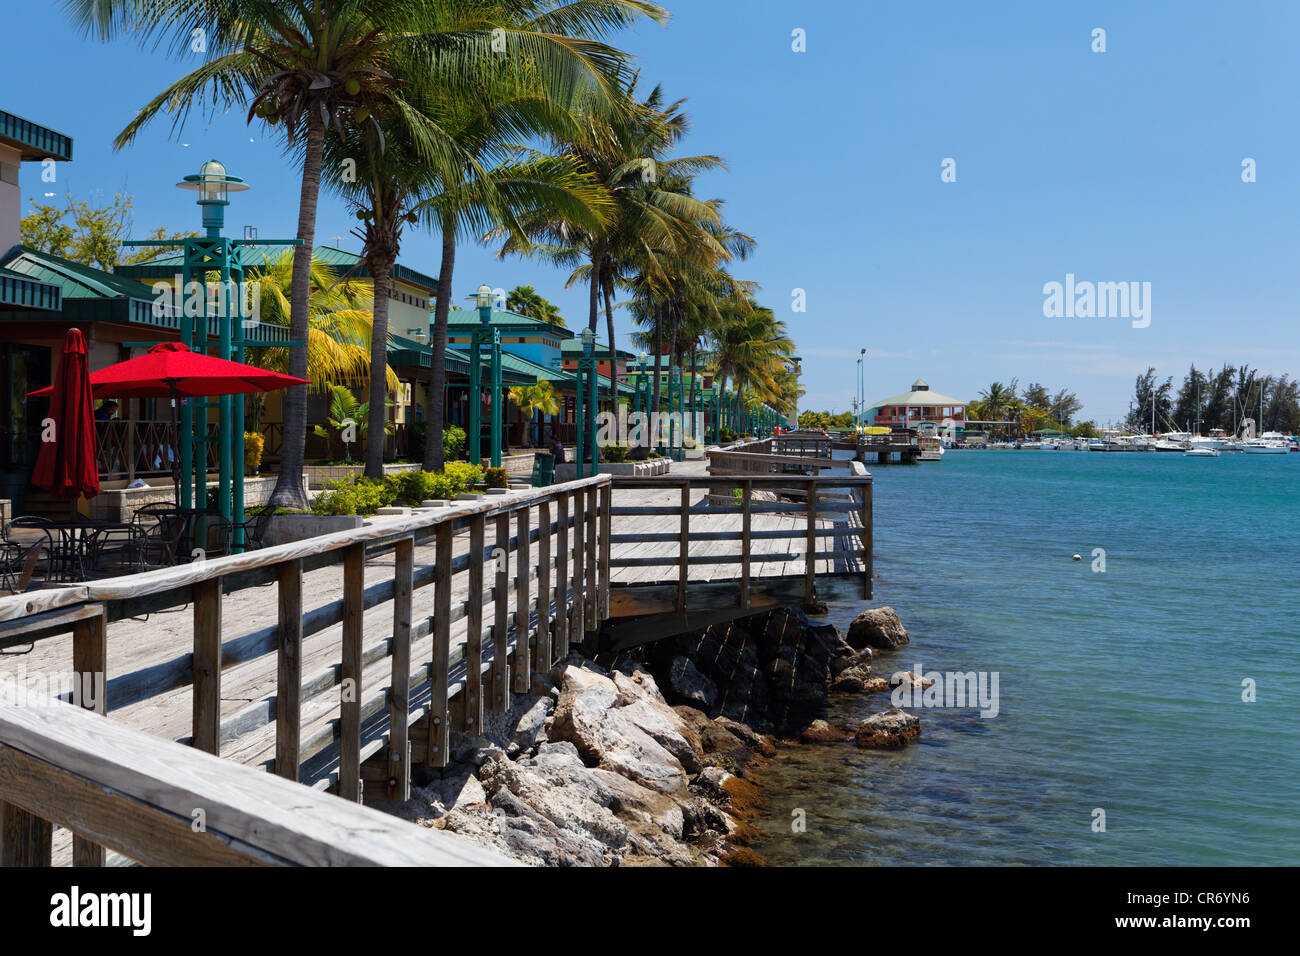 Food Kiosks on the Pier; Playa Ponce, Puerto Rico Stock Photo